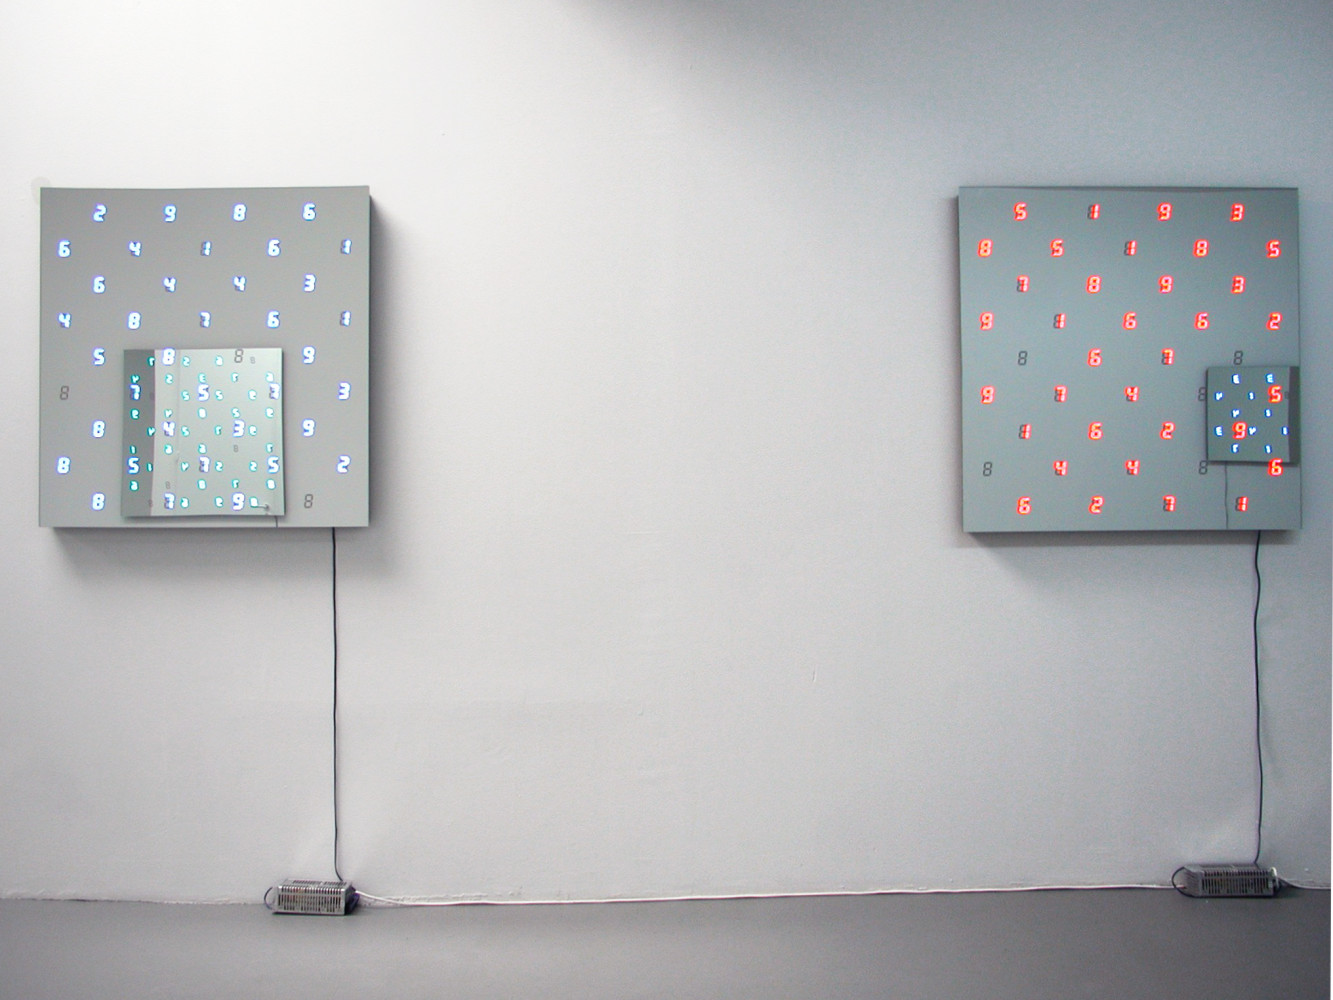 Tatsuo Miyajima, ‘Changing time with changing self’, Installation view, Buchmann Galerie Köln, 2001